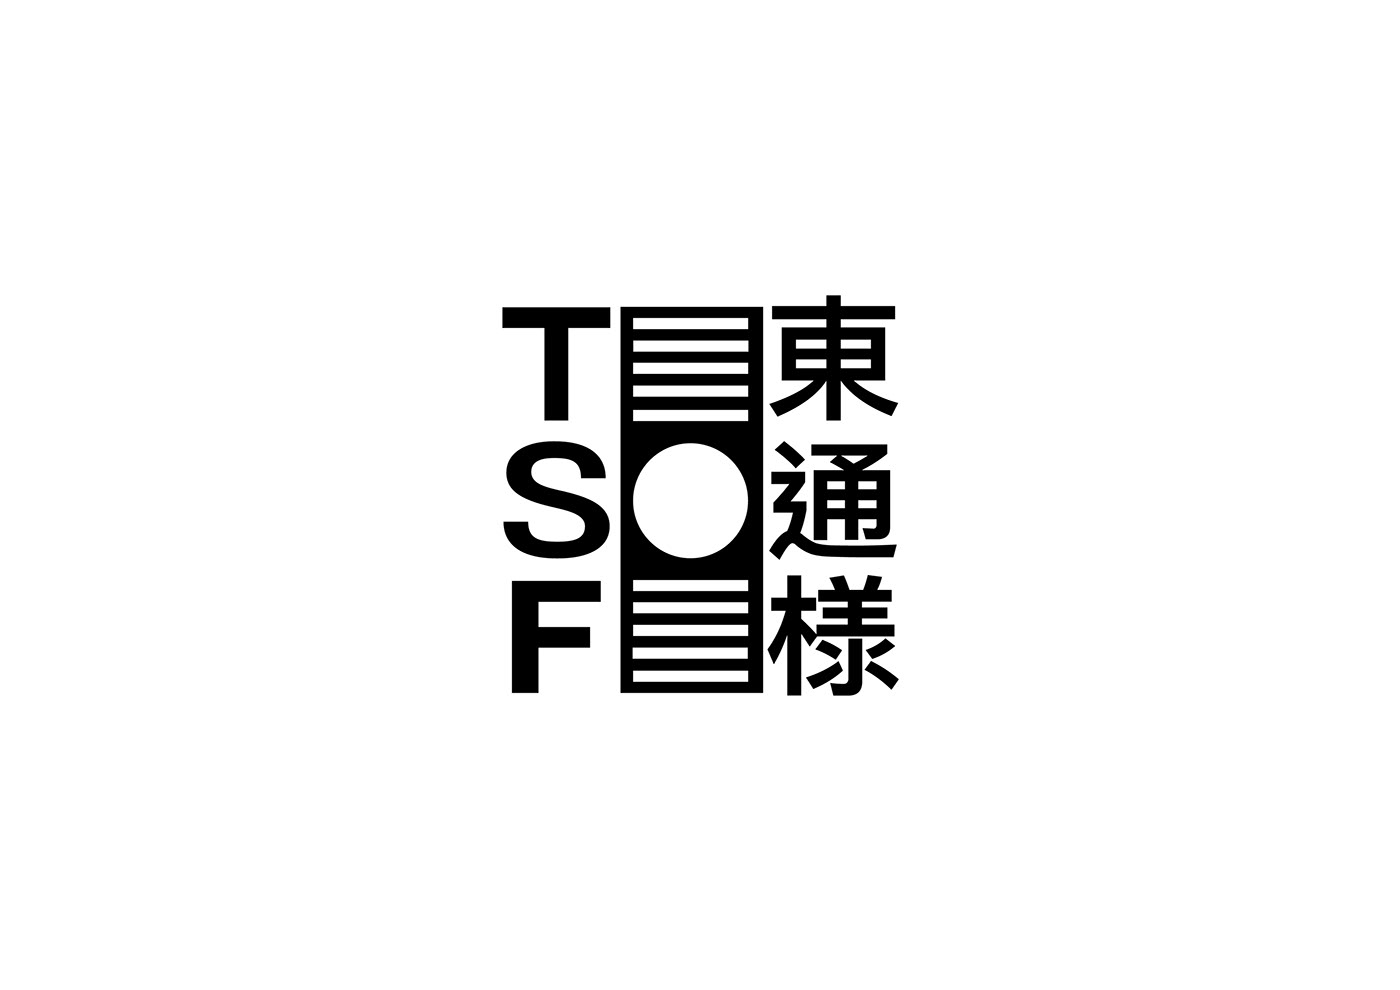 brand brand identity branding  Exhibition  Exhibition Design  Fashion  streetfashion streetwear tokyo visual identity